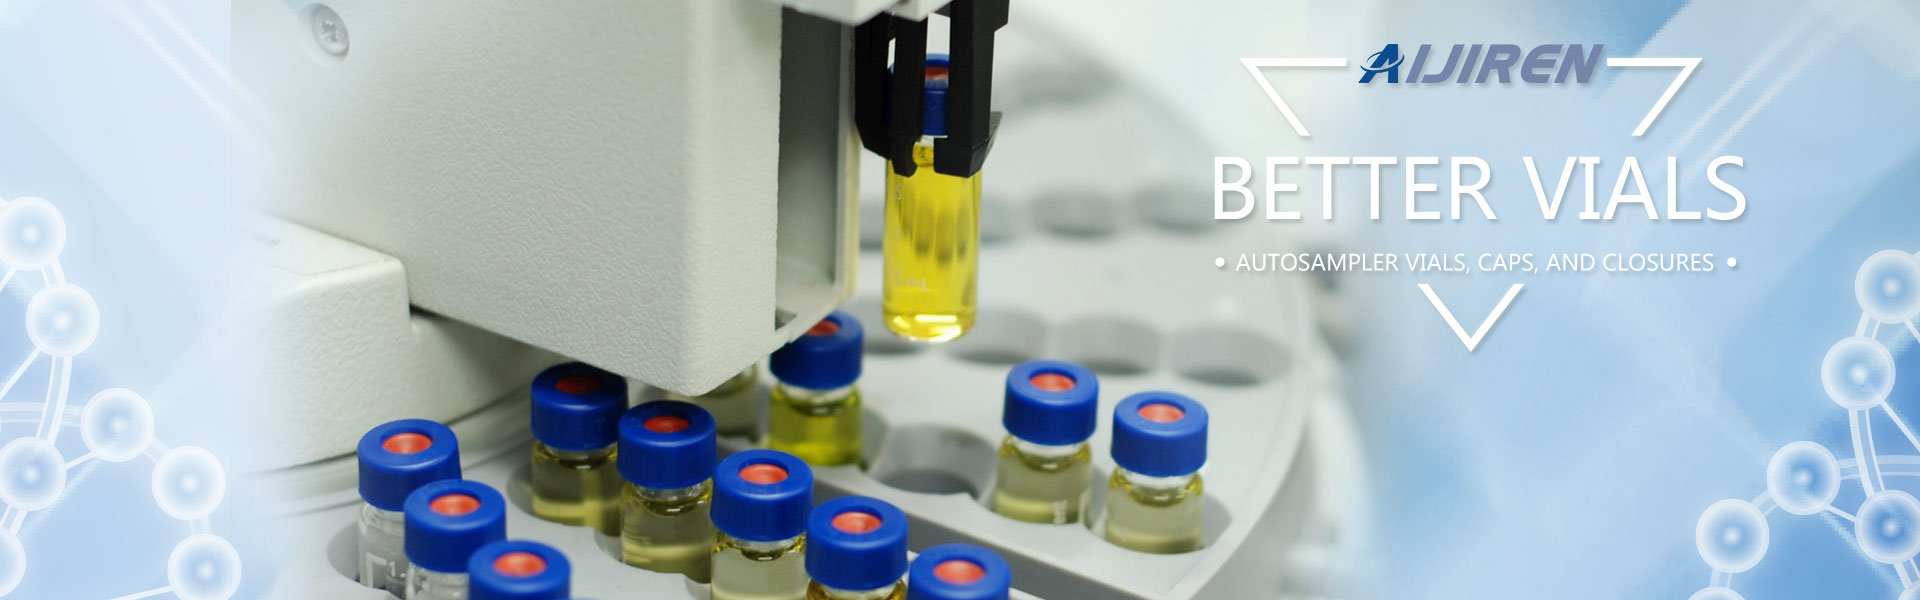 lab chromatography vials supplier